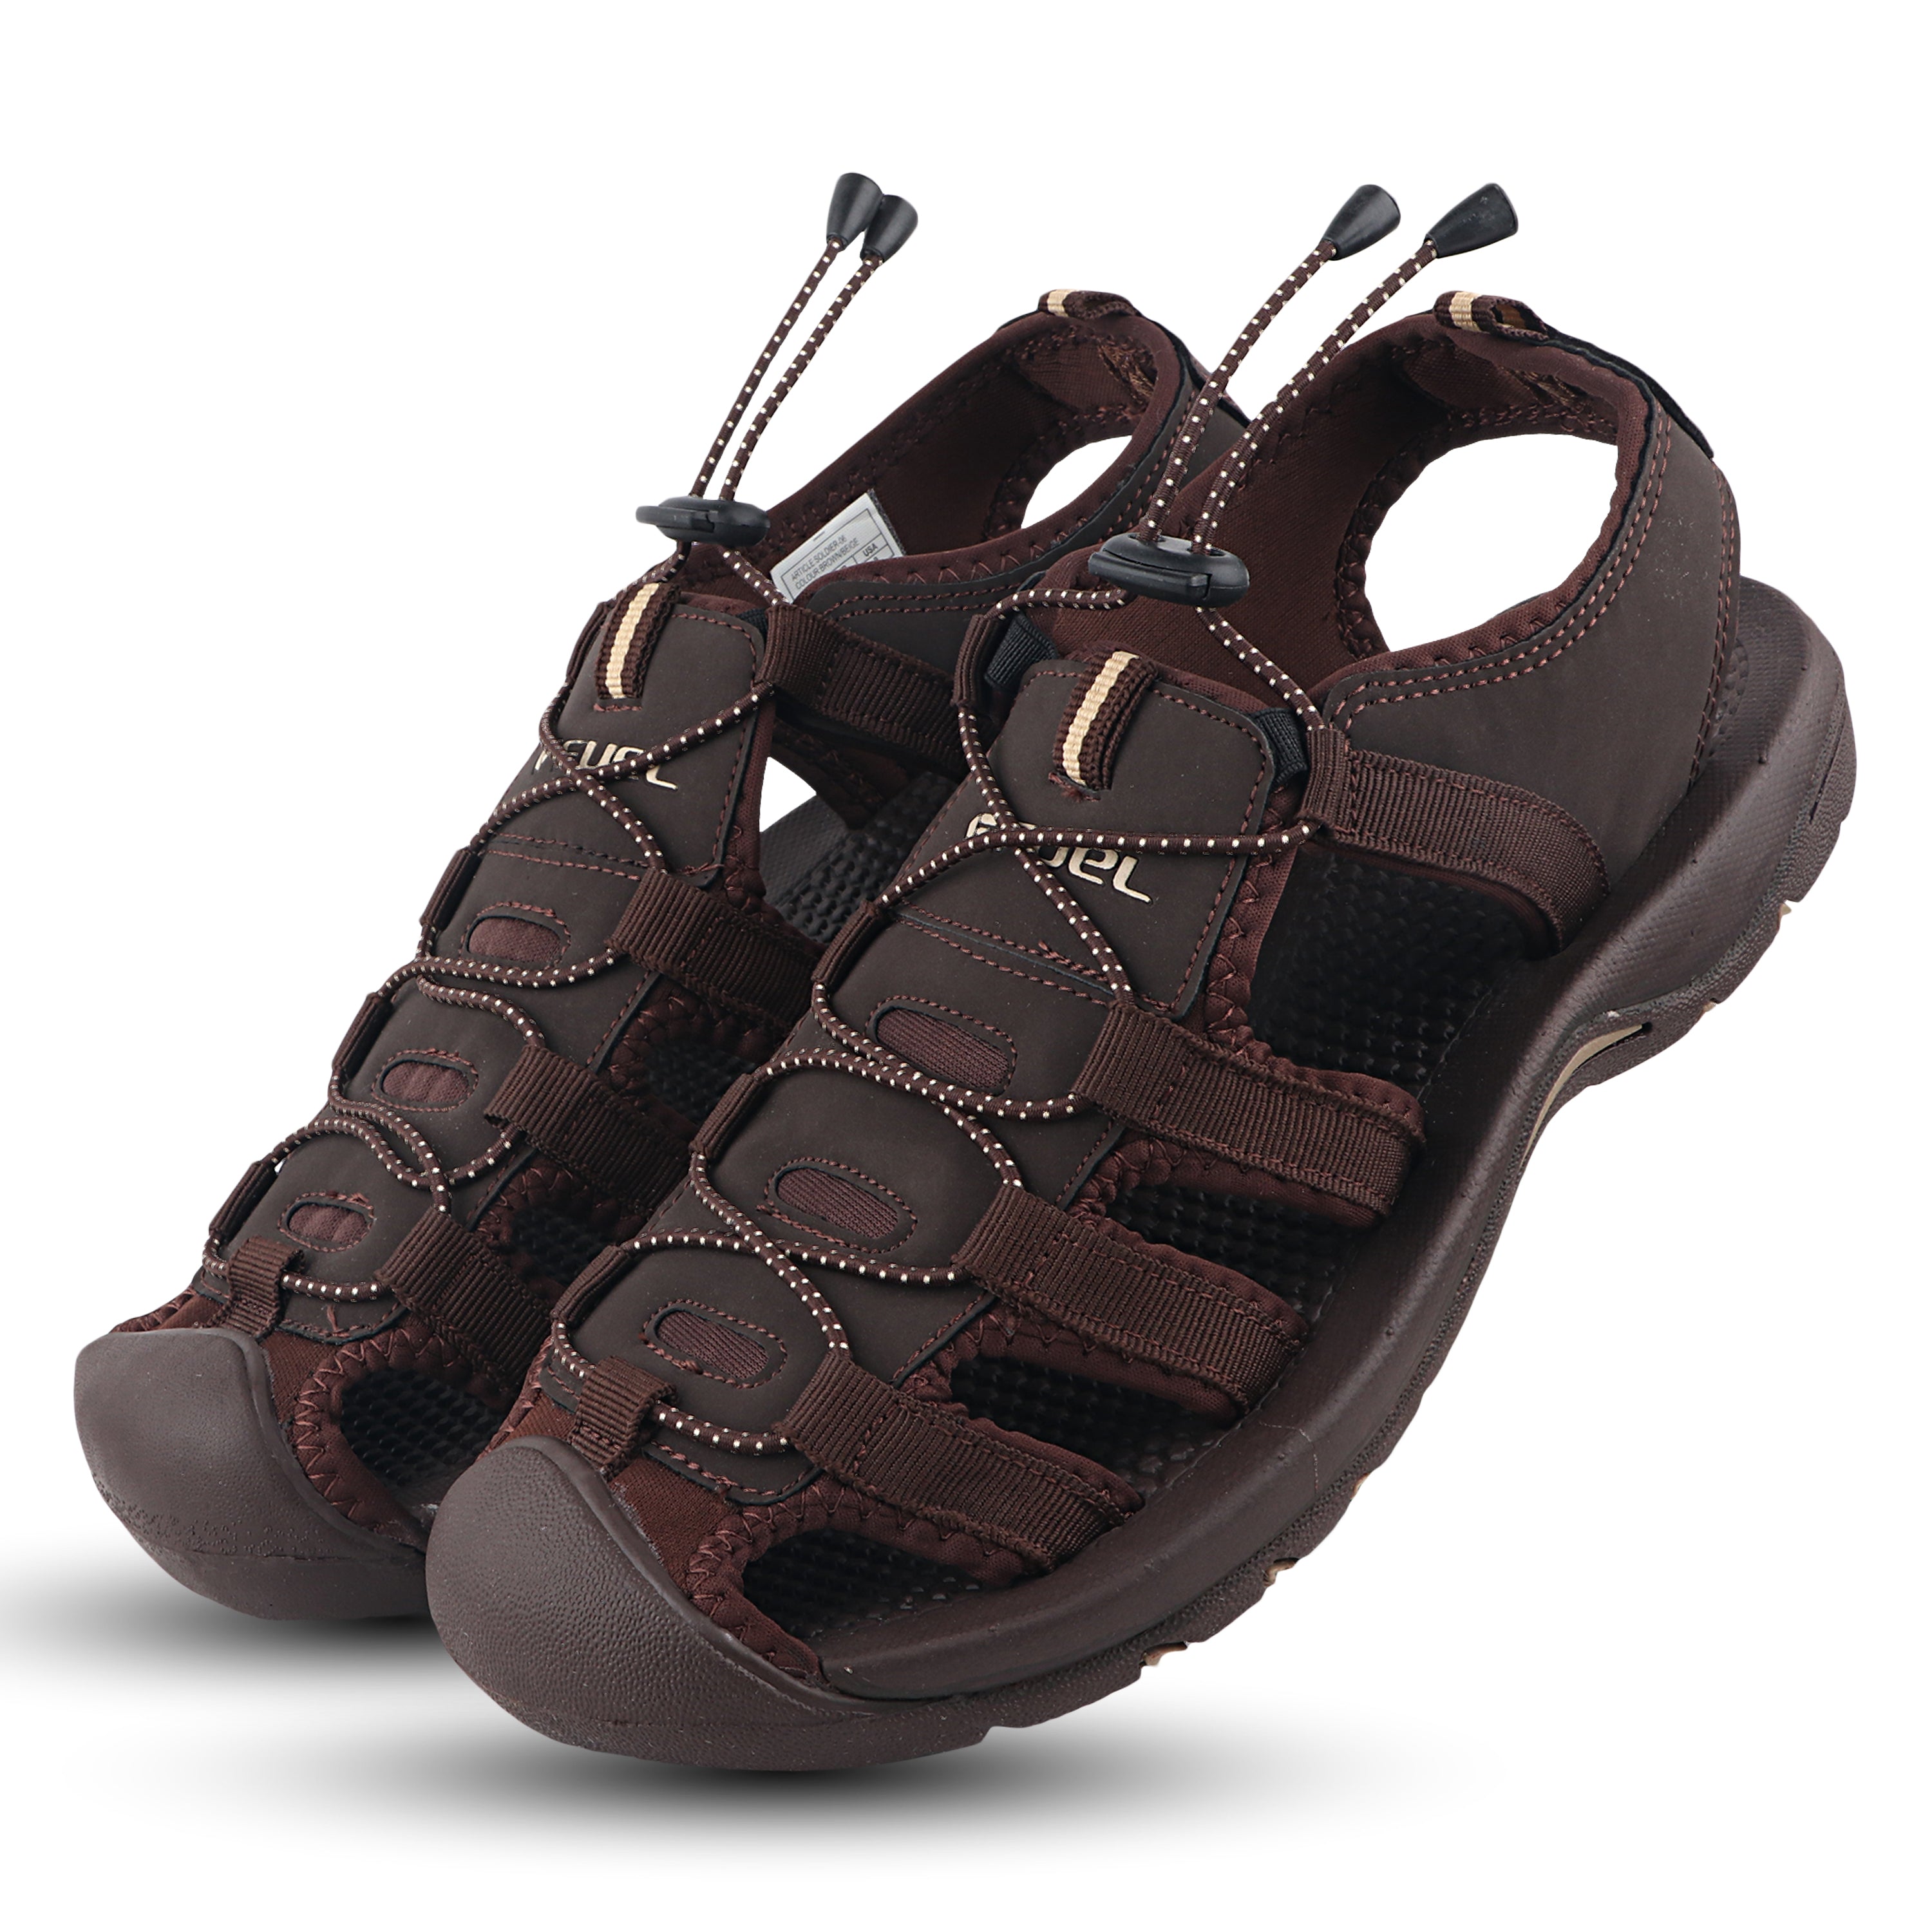 Fuel Soldier-06 Fisherman Sandals for Men (Brown)